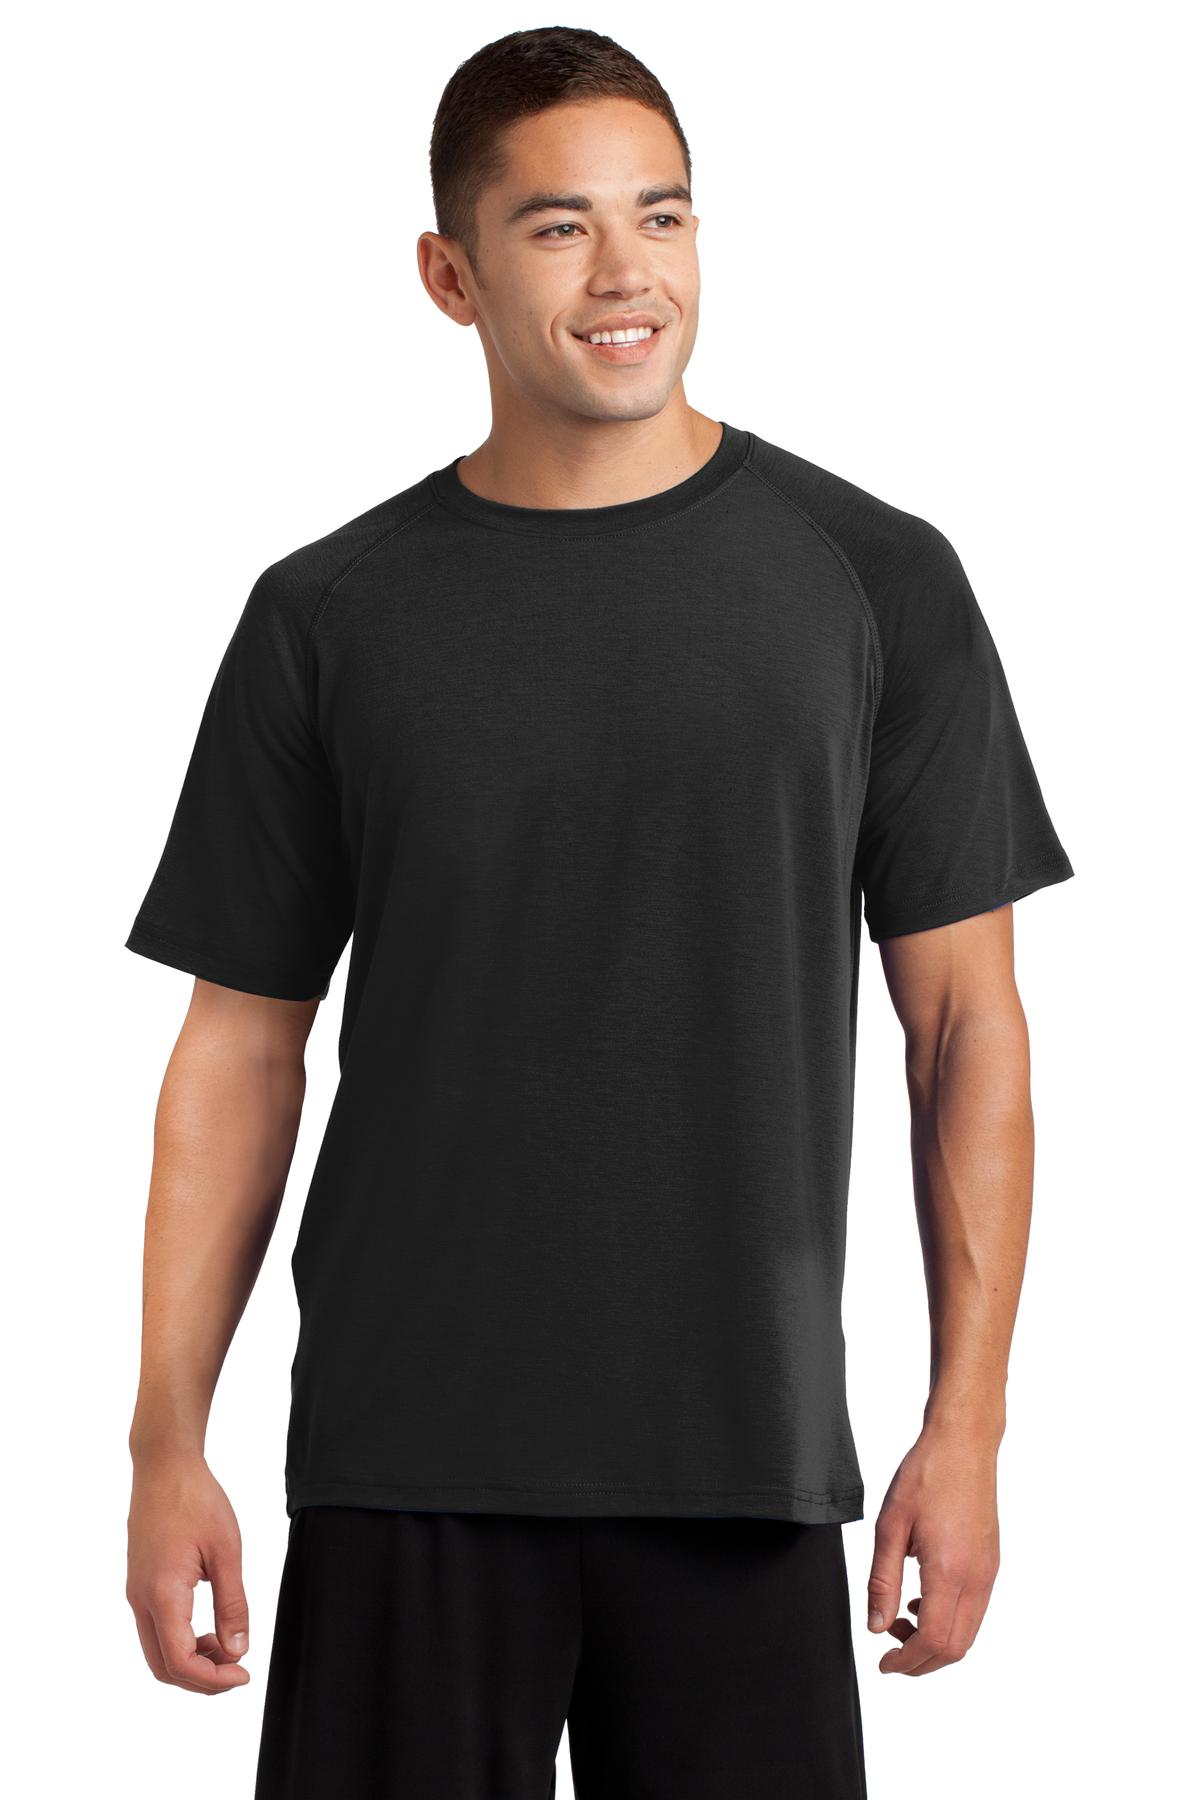 Sport-Tek Activewear T-Shirts for Hospitality ® Ultimate Performance Crew.-Sport-Tek